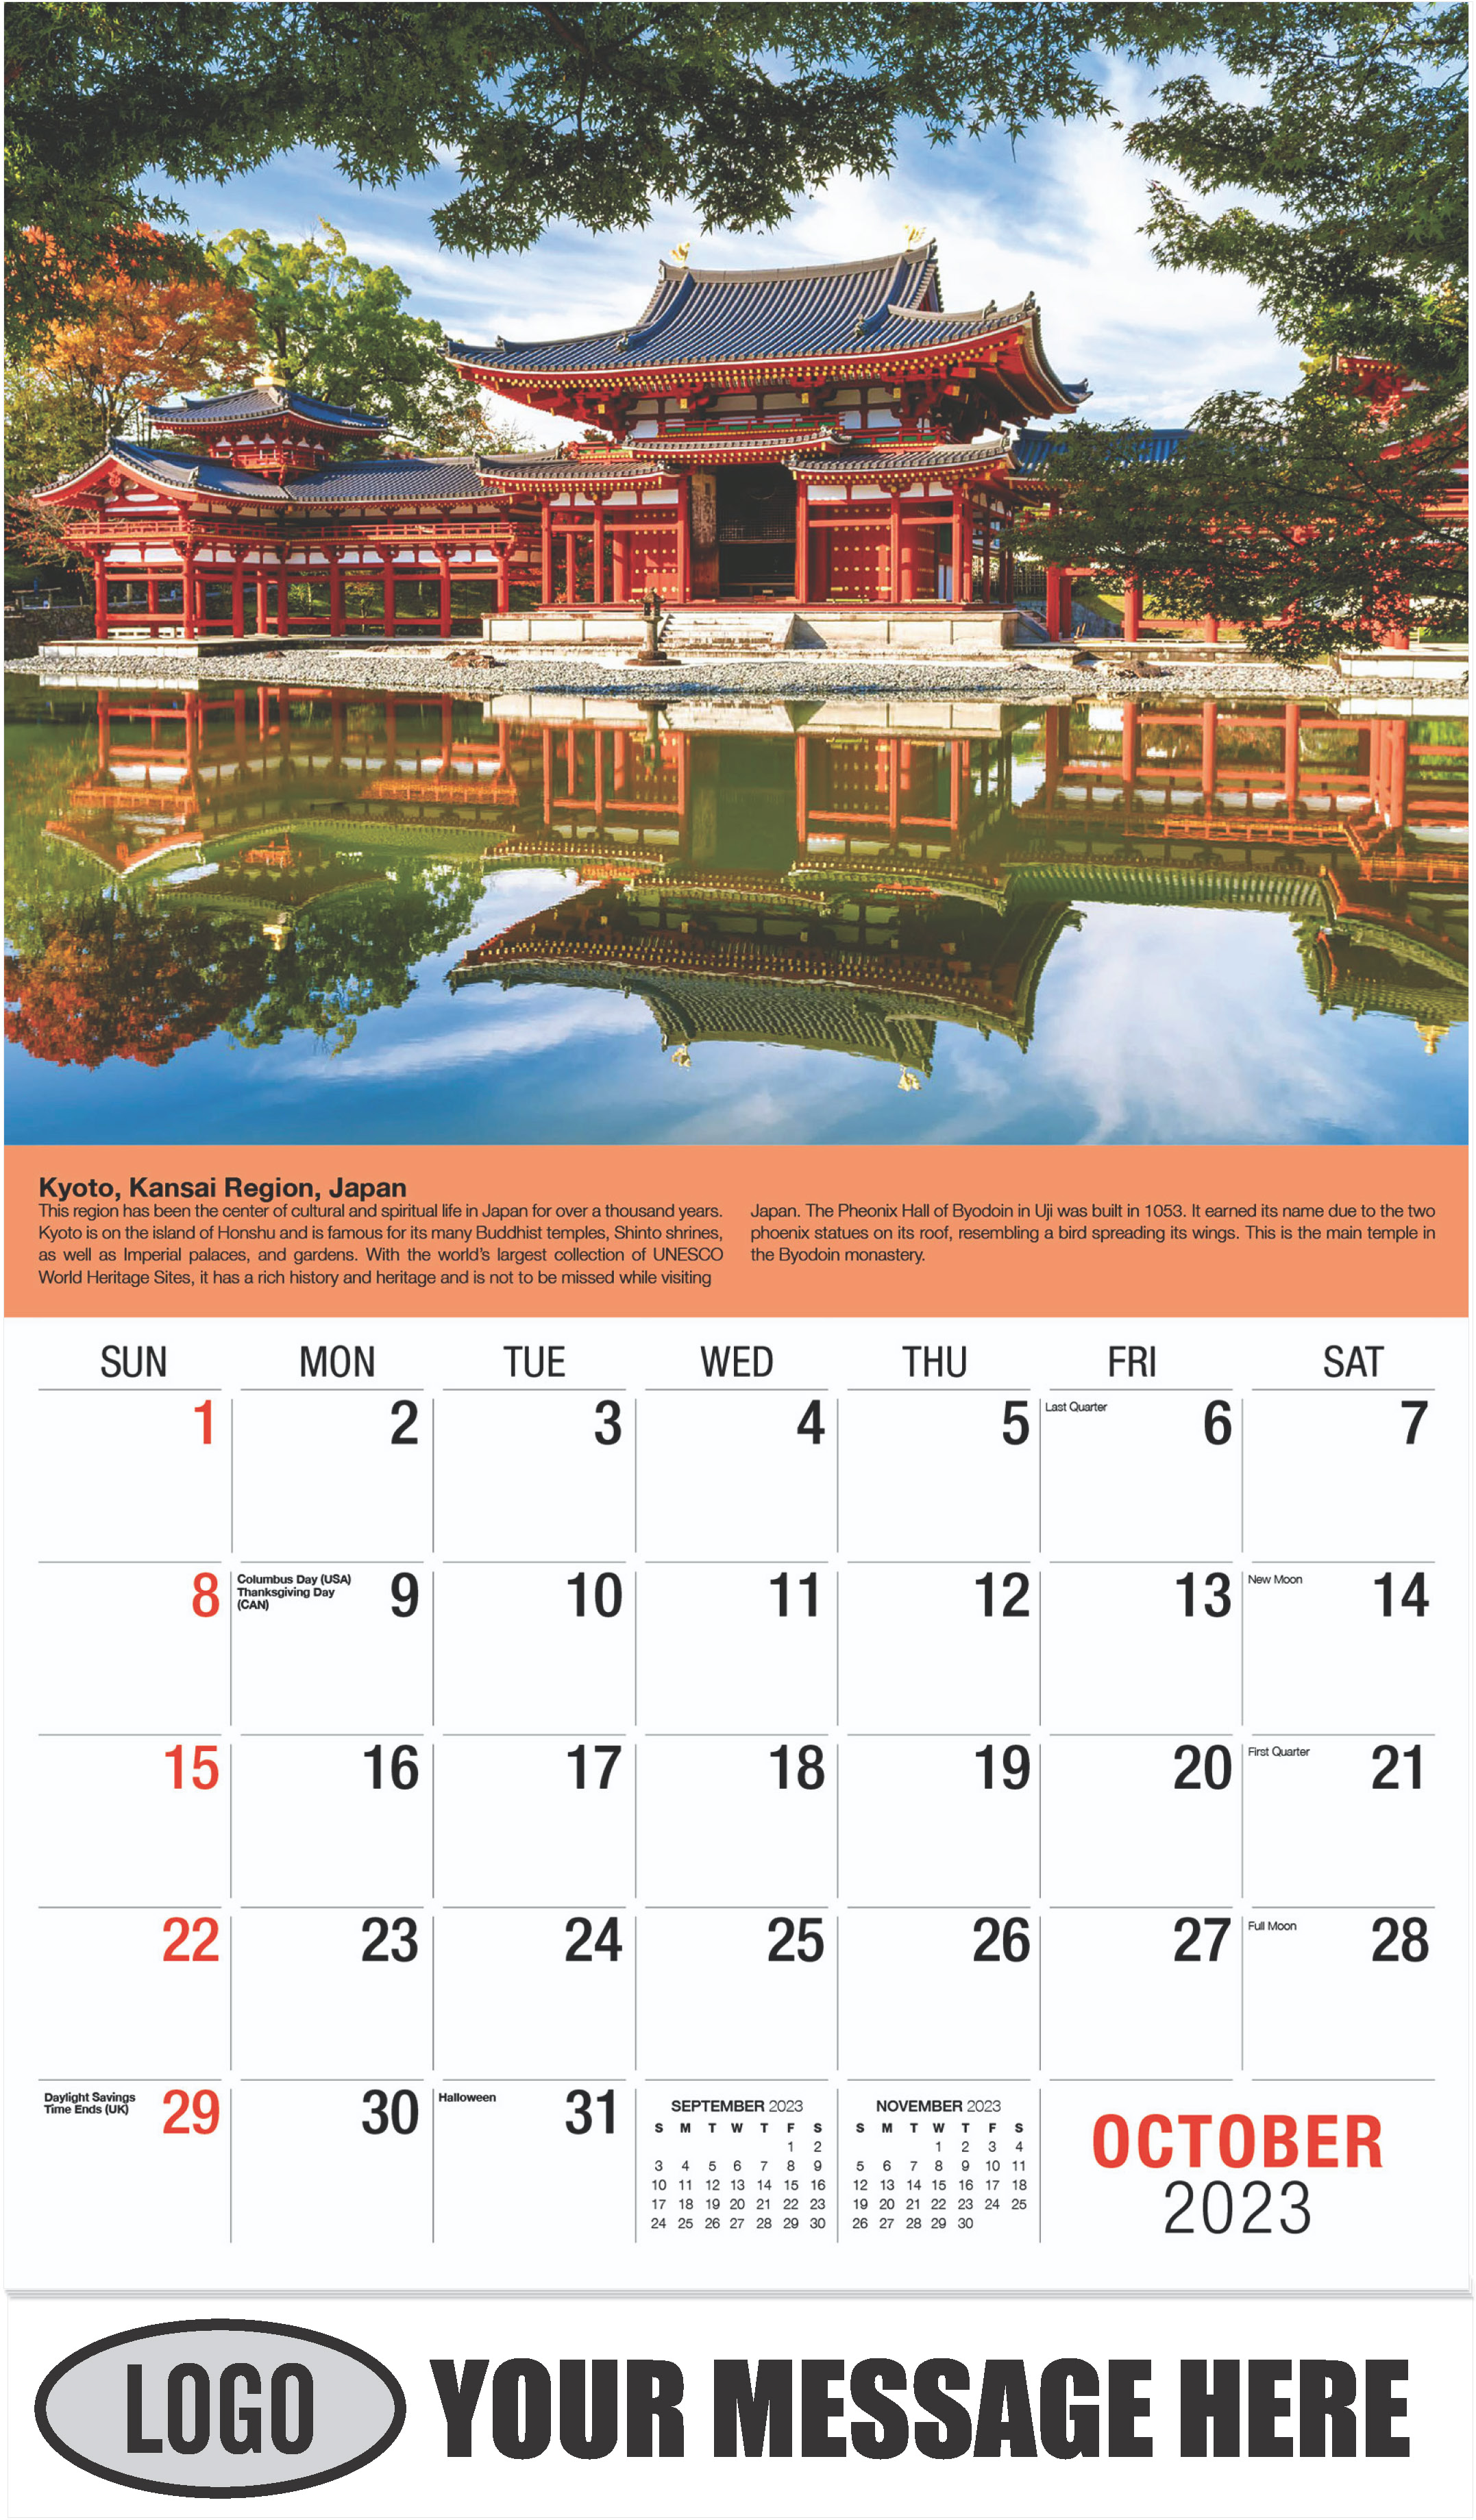 Byodo-in Temple, Uji, Japan - October - World Travel 2023 Promotional Calendar